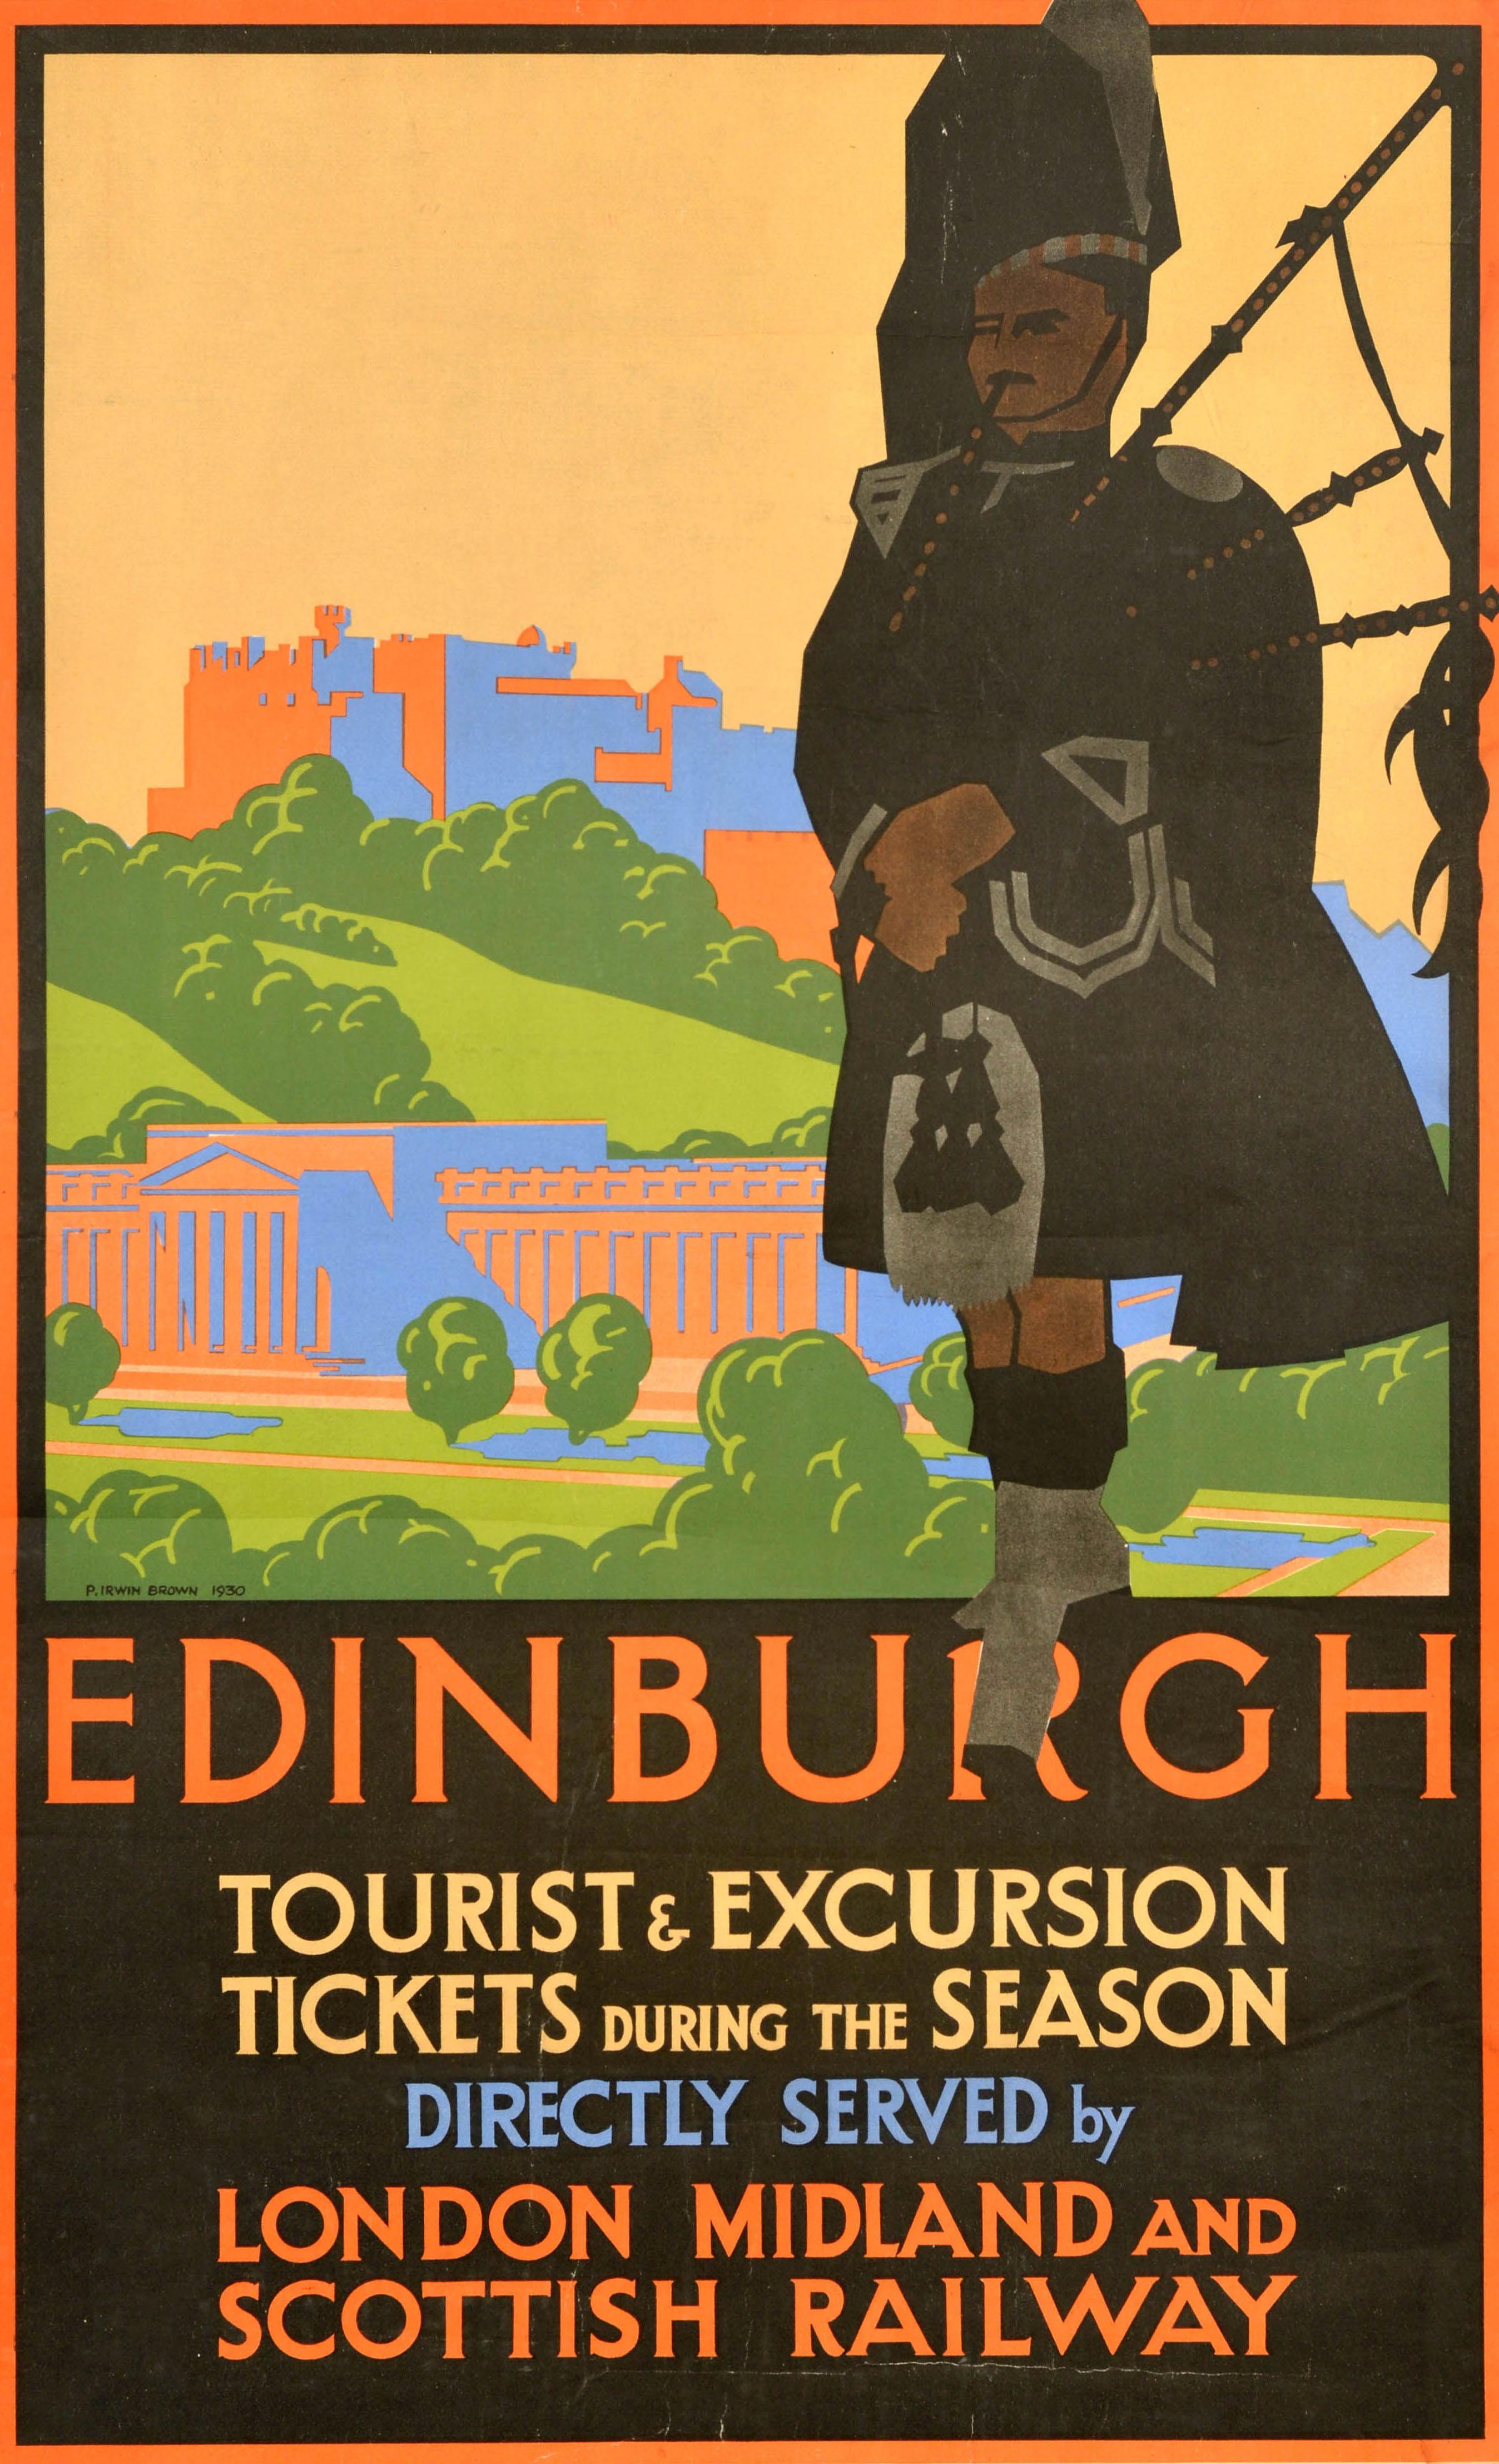 Original Vintage Travel Poster Edinburgh LMS London Midland And Scottish Railway - Print by Pieter Irwin Brown